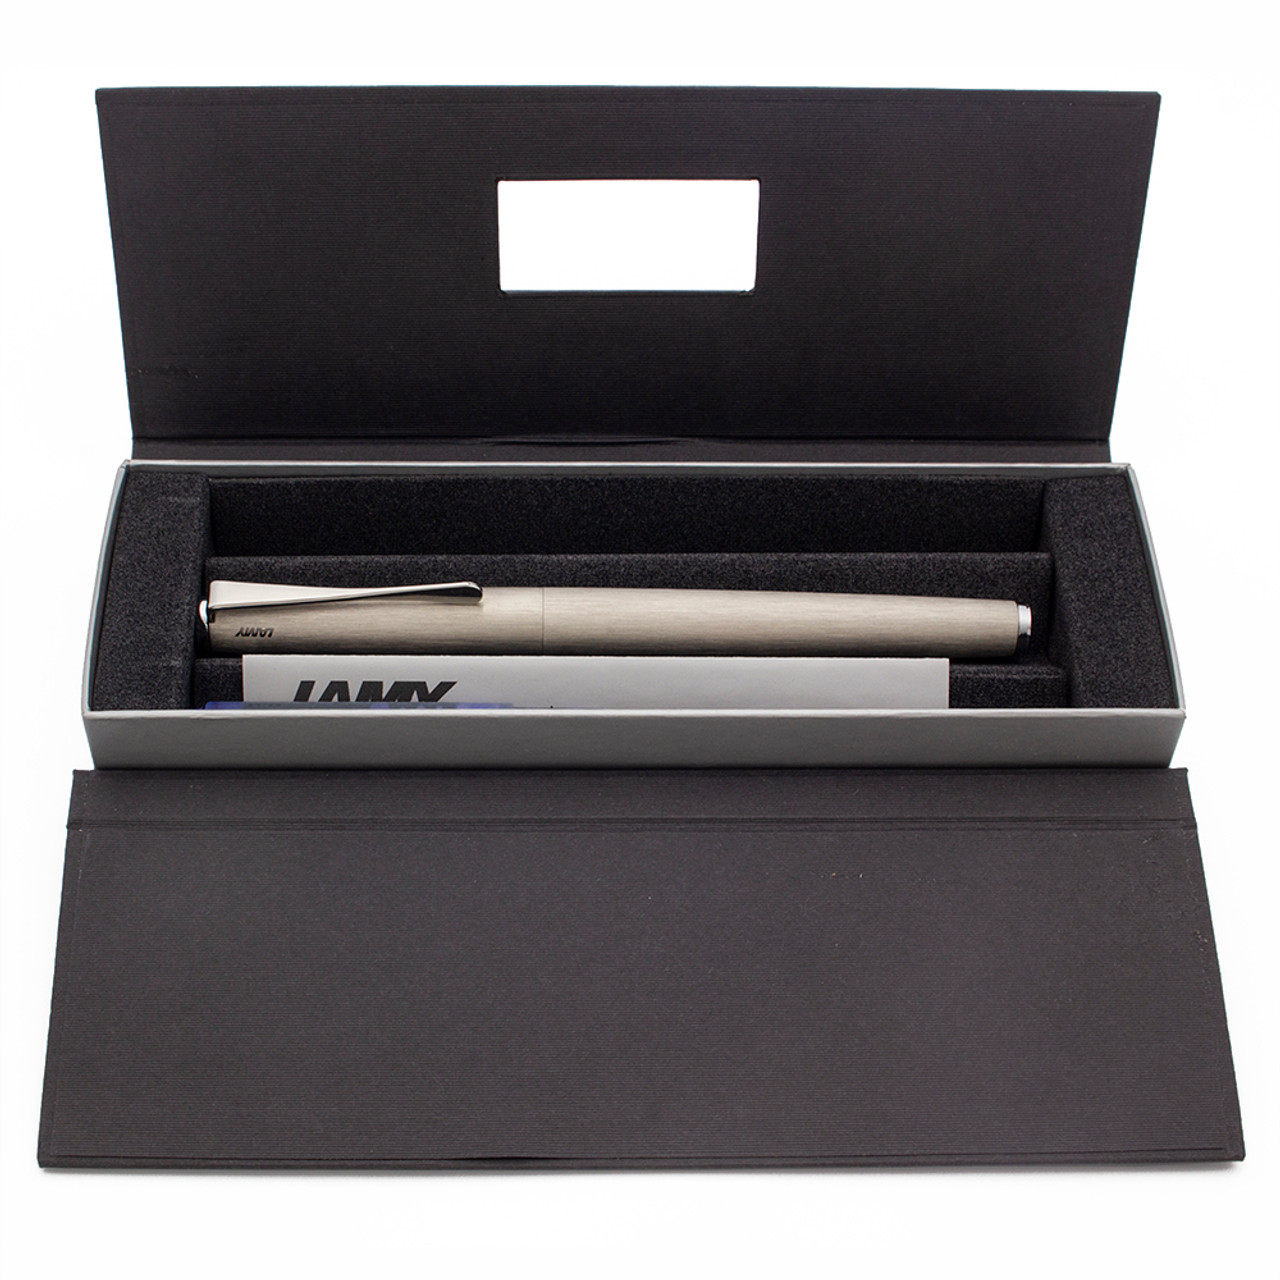 Lamy Studio Fountain Pen - Stainless Steel, C/C, Extra-Fine Steel Nib (Mint in Box, Works Well)